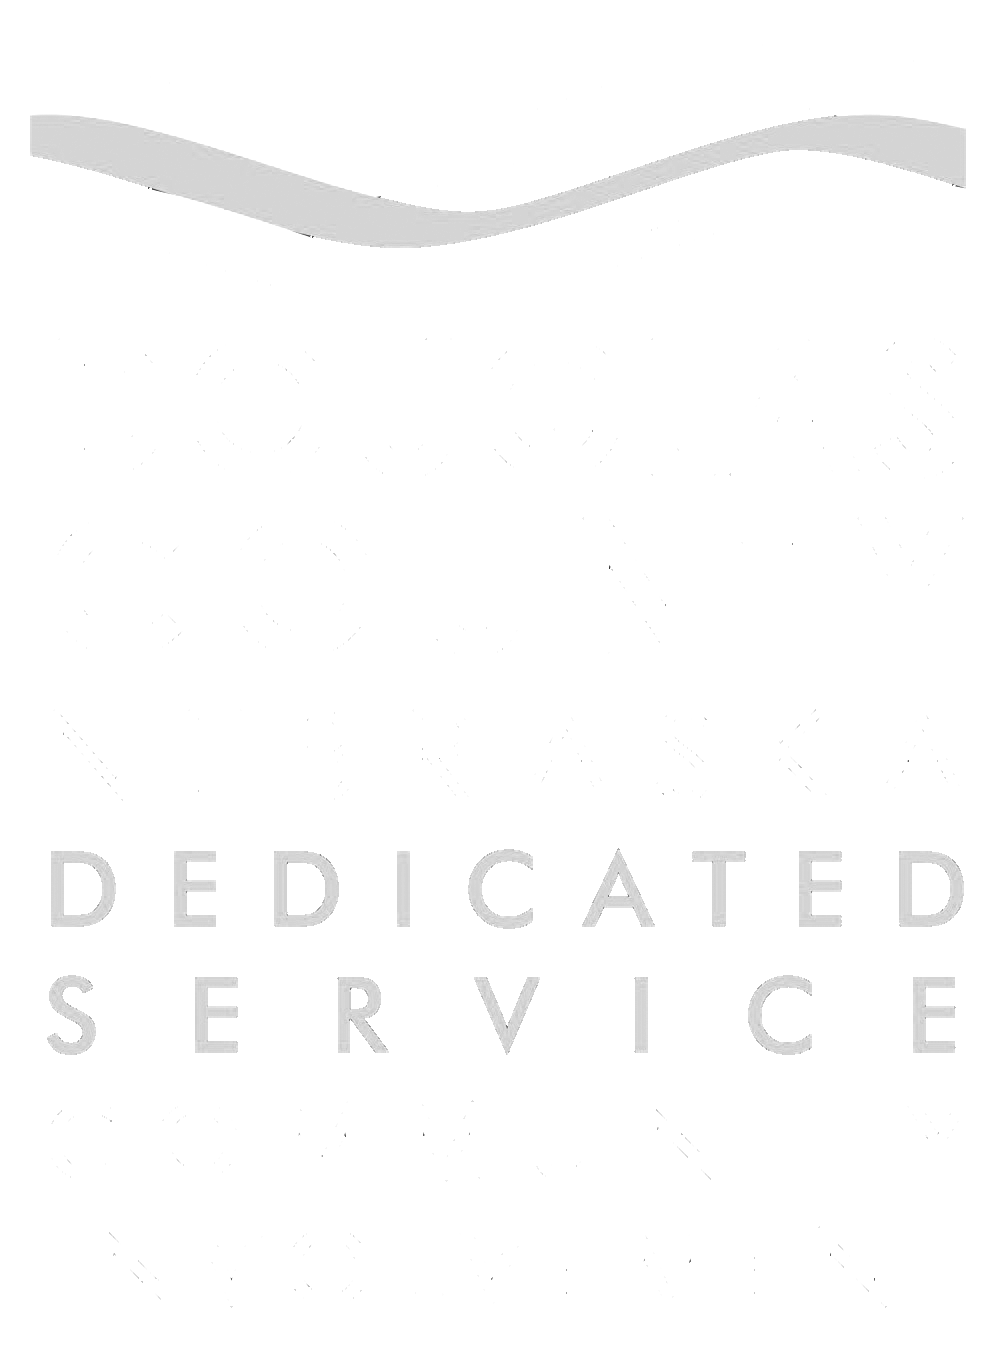 The logo for douglas county nebraska dedicated service community involvement